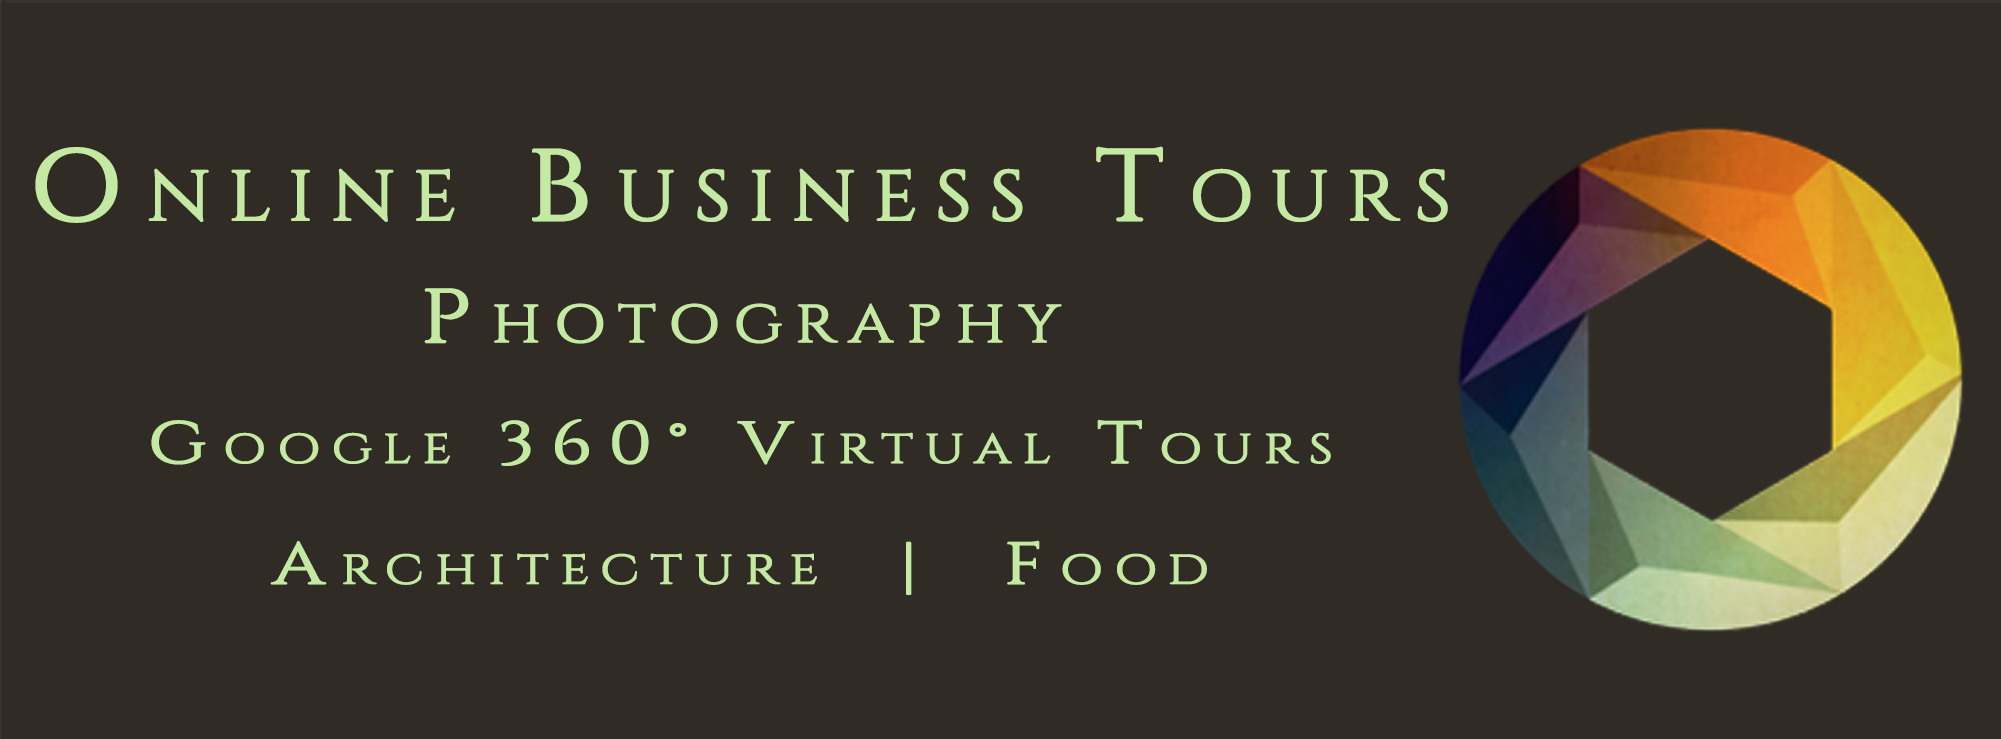 Online Business Tours